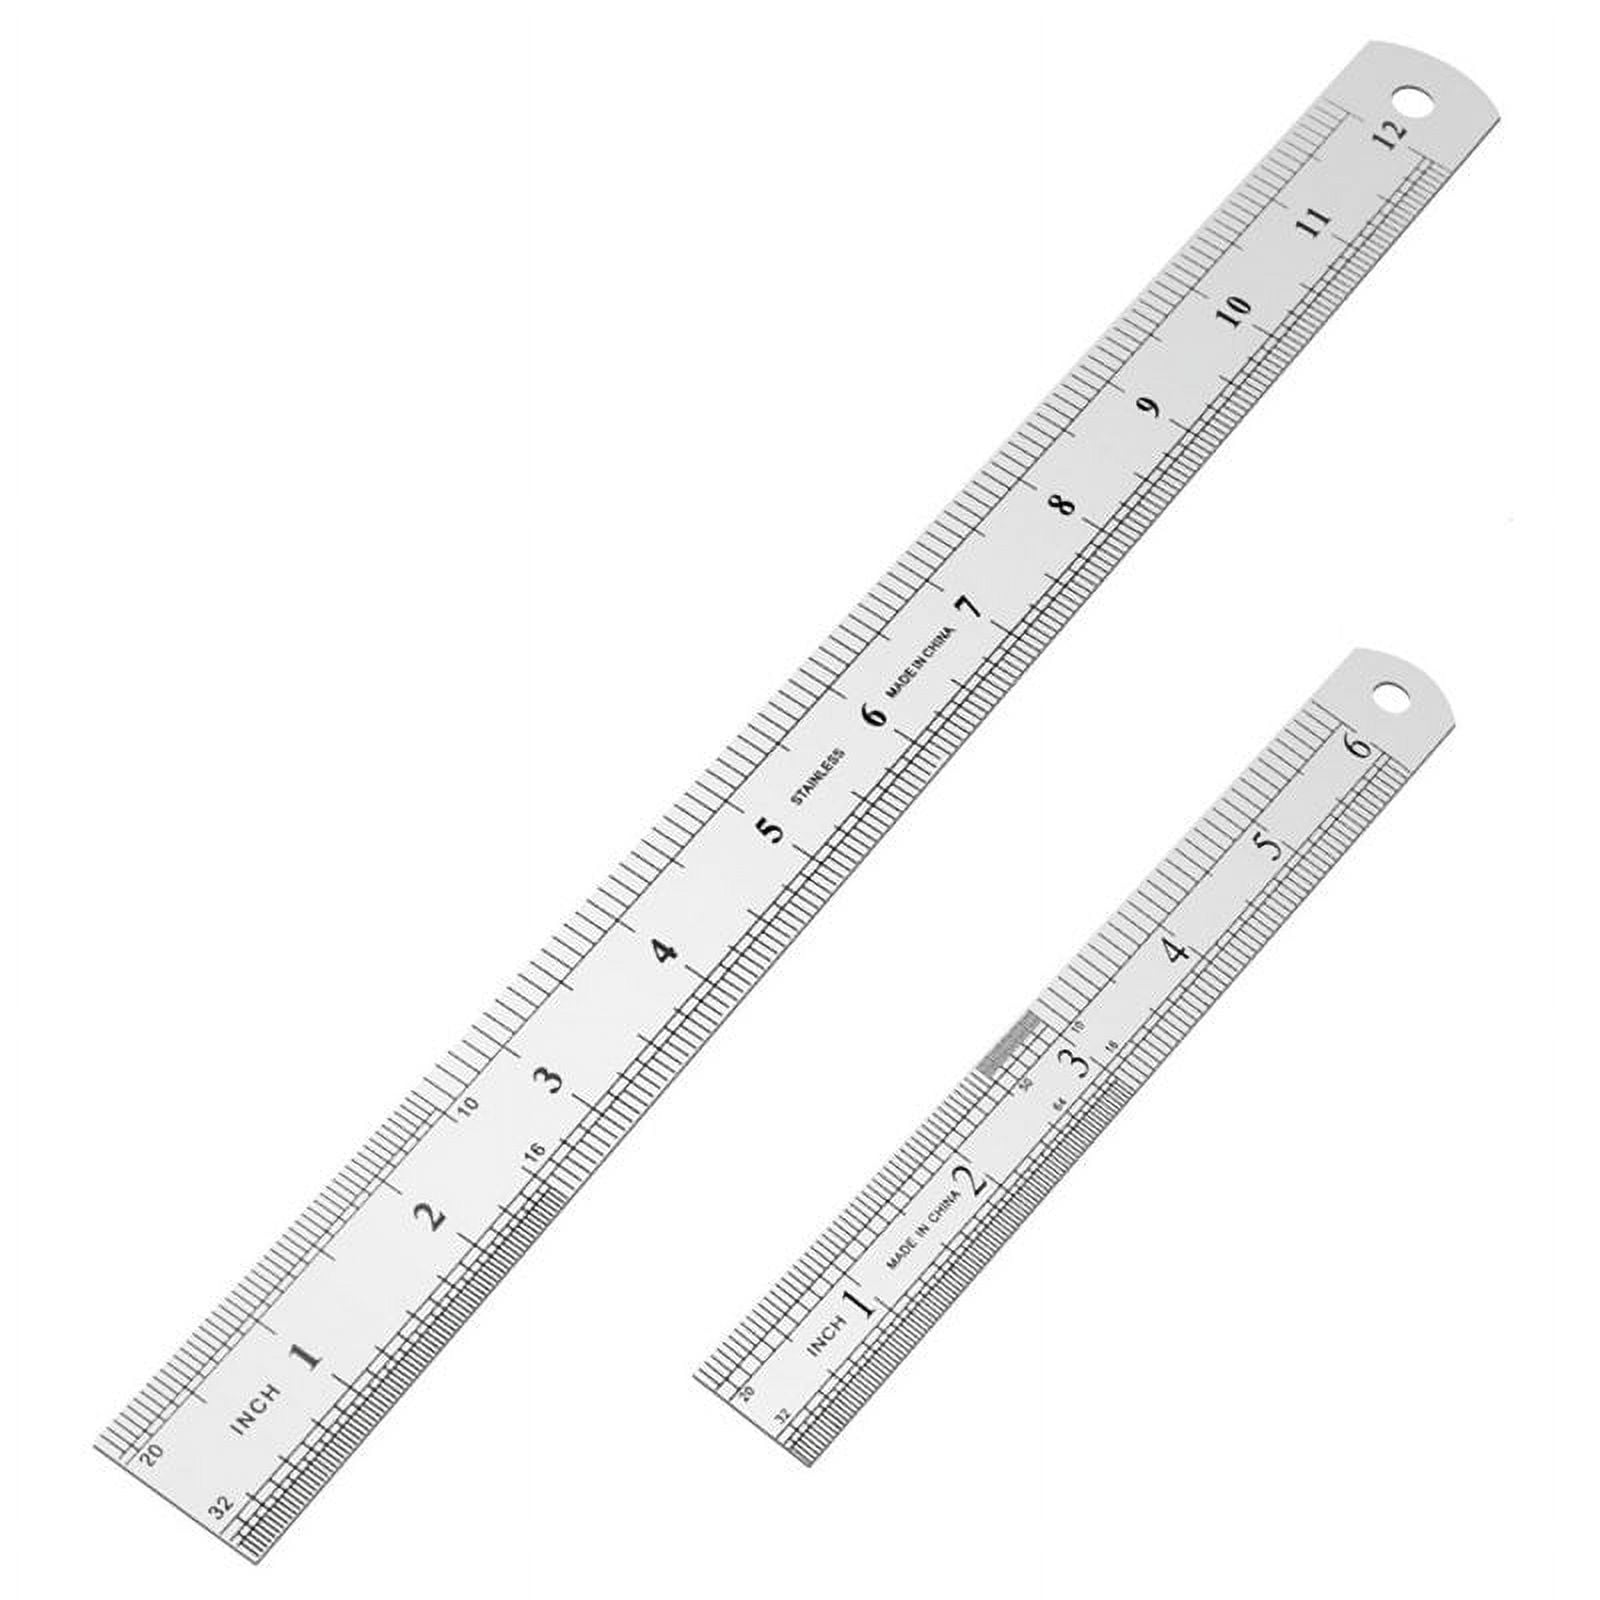 2 x Stainless Steel Metal Rulers 12 inch & 6 inch – Homesmart